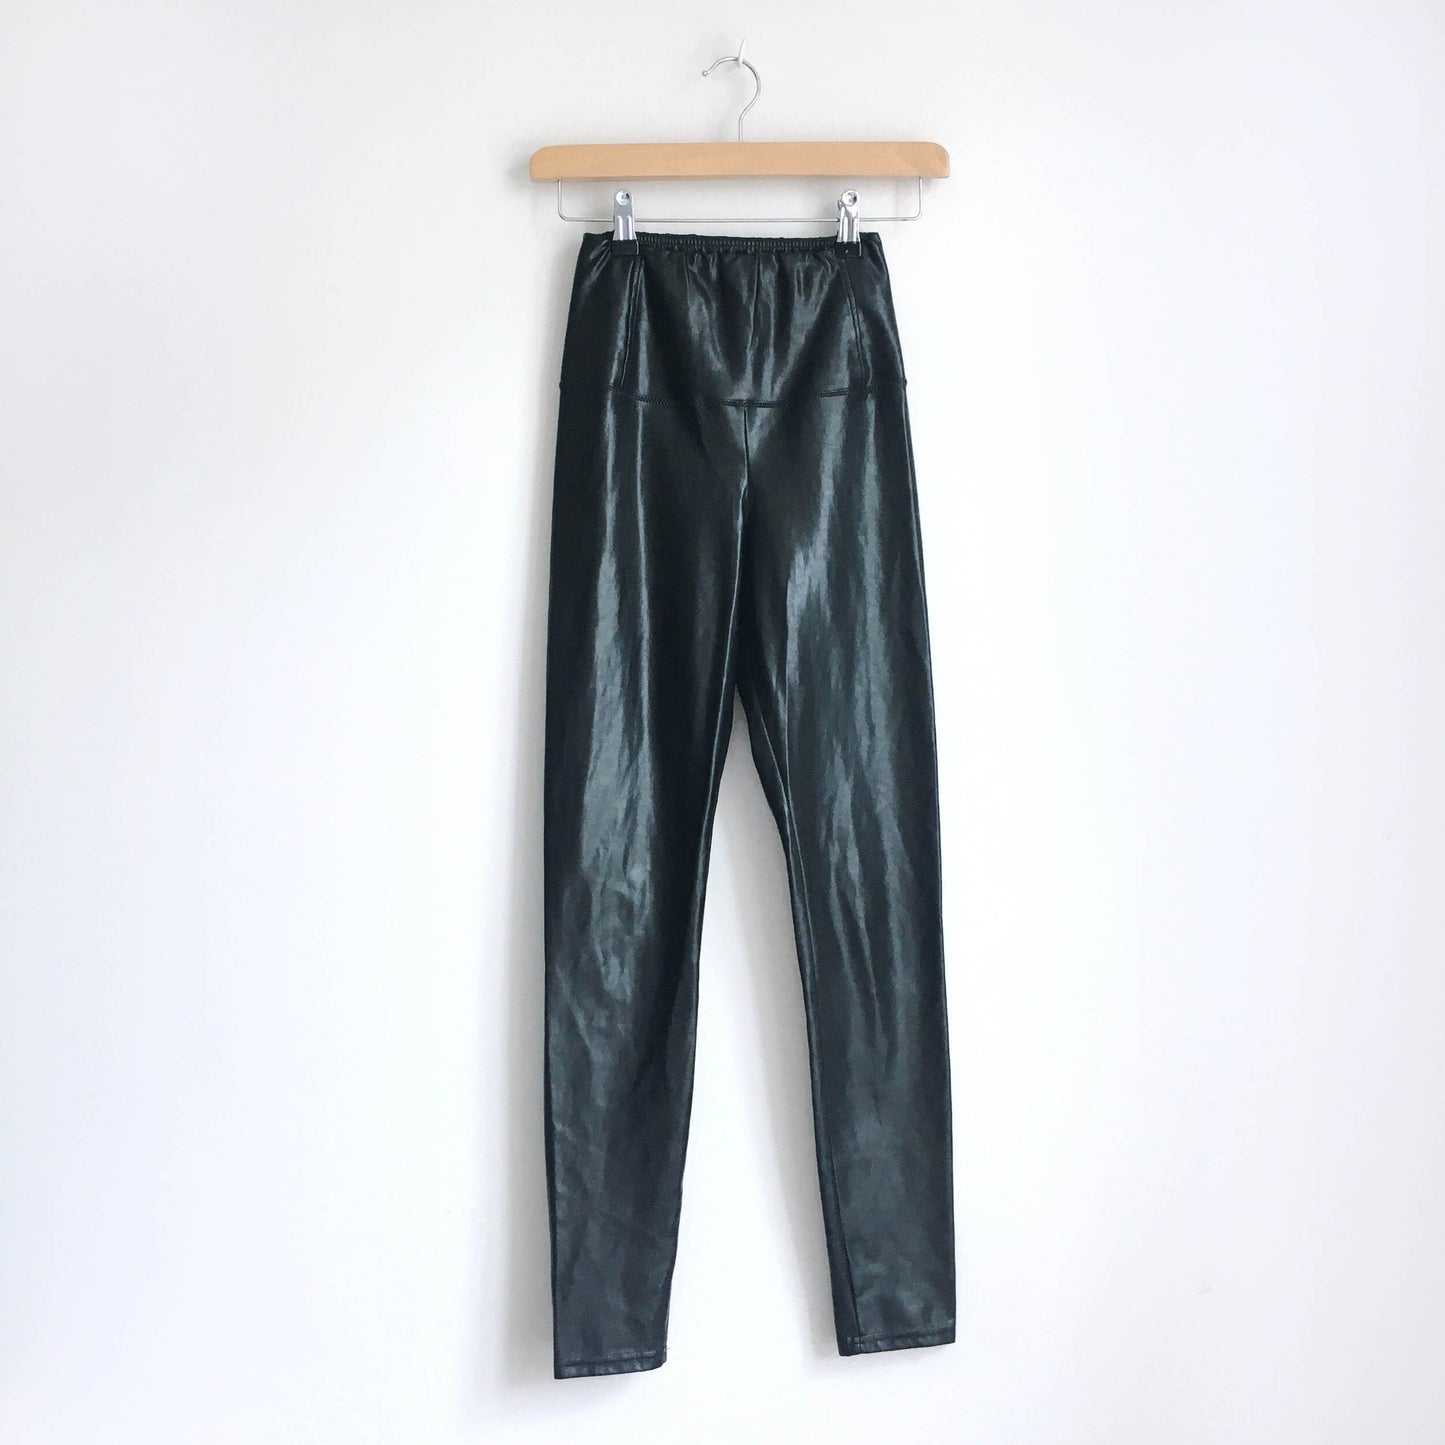 Wilfred Free Daria Vegan leather legging - size xxs